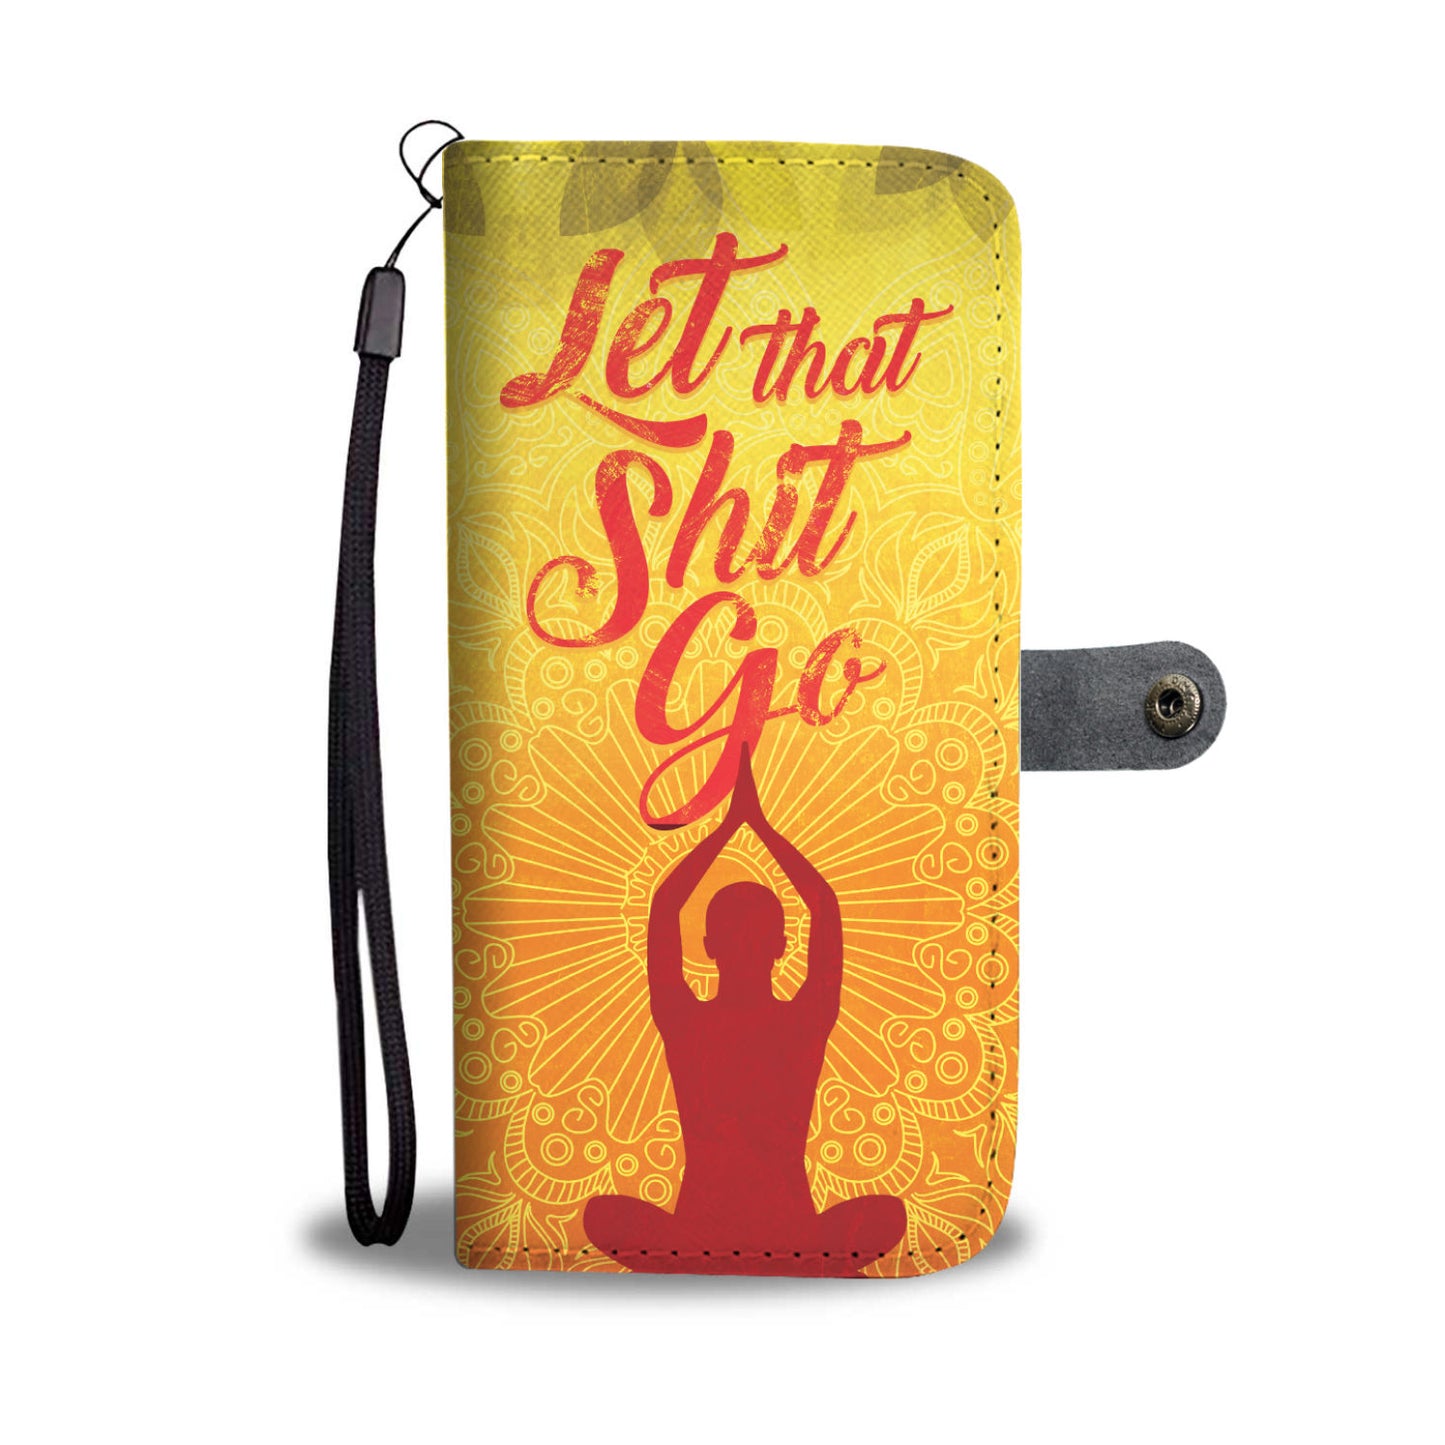 Meditation (Let that Shit Go!) Phone Wallet Case